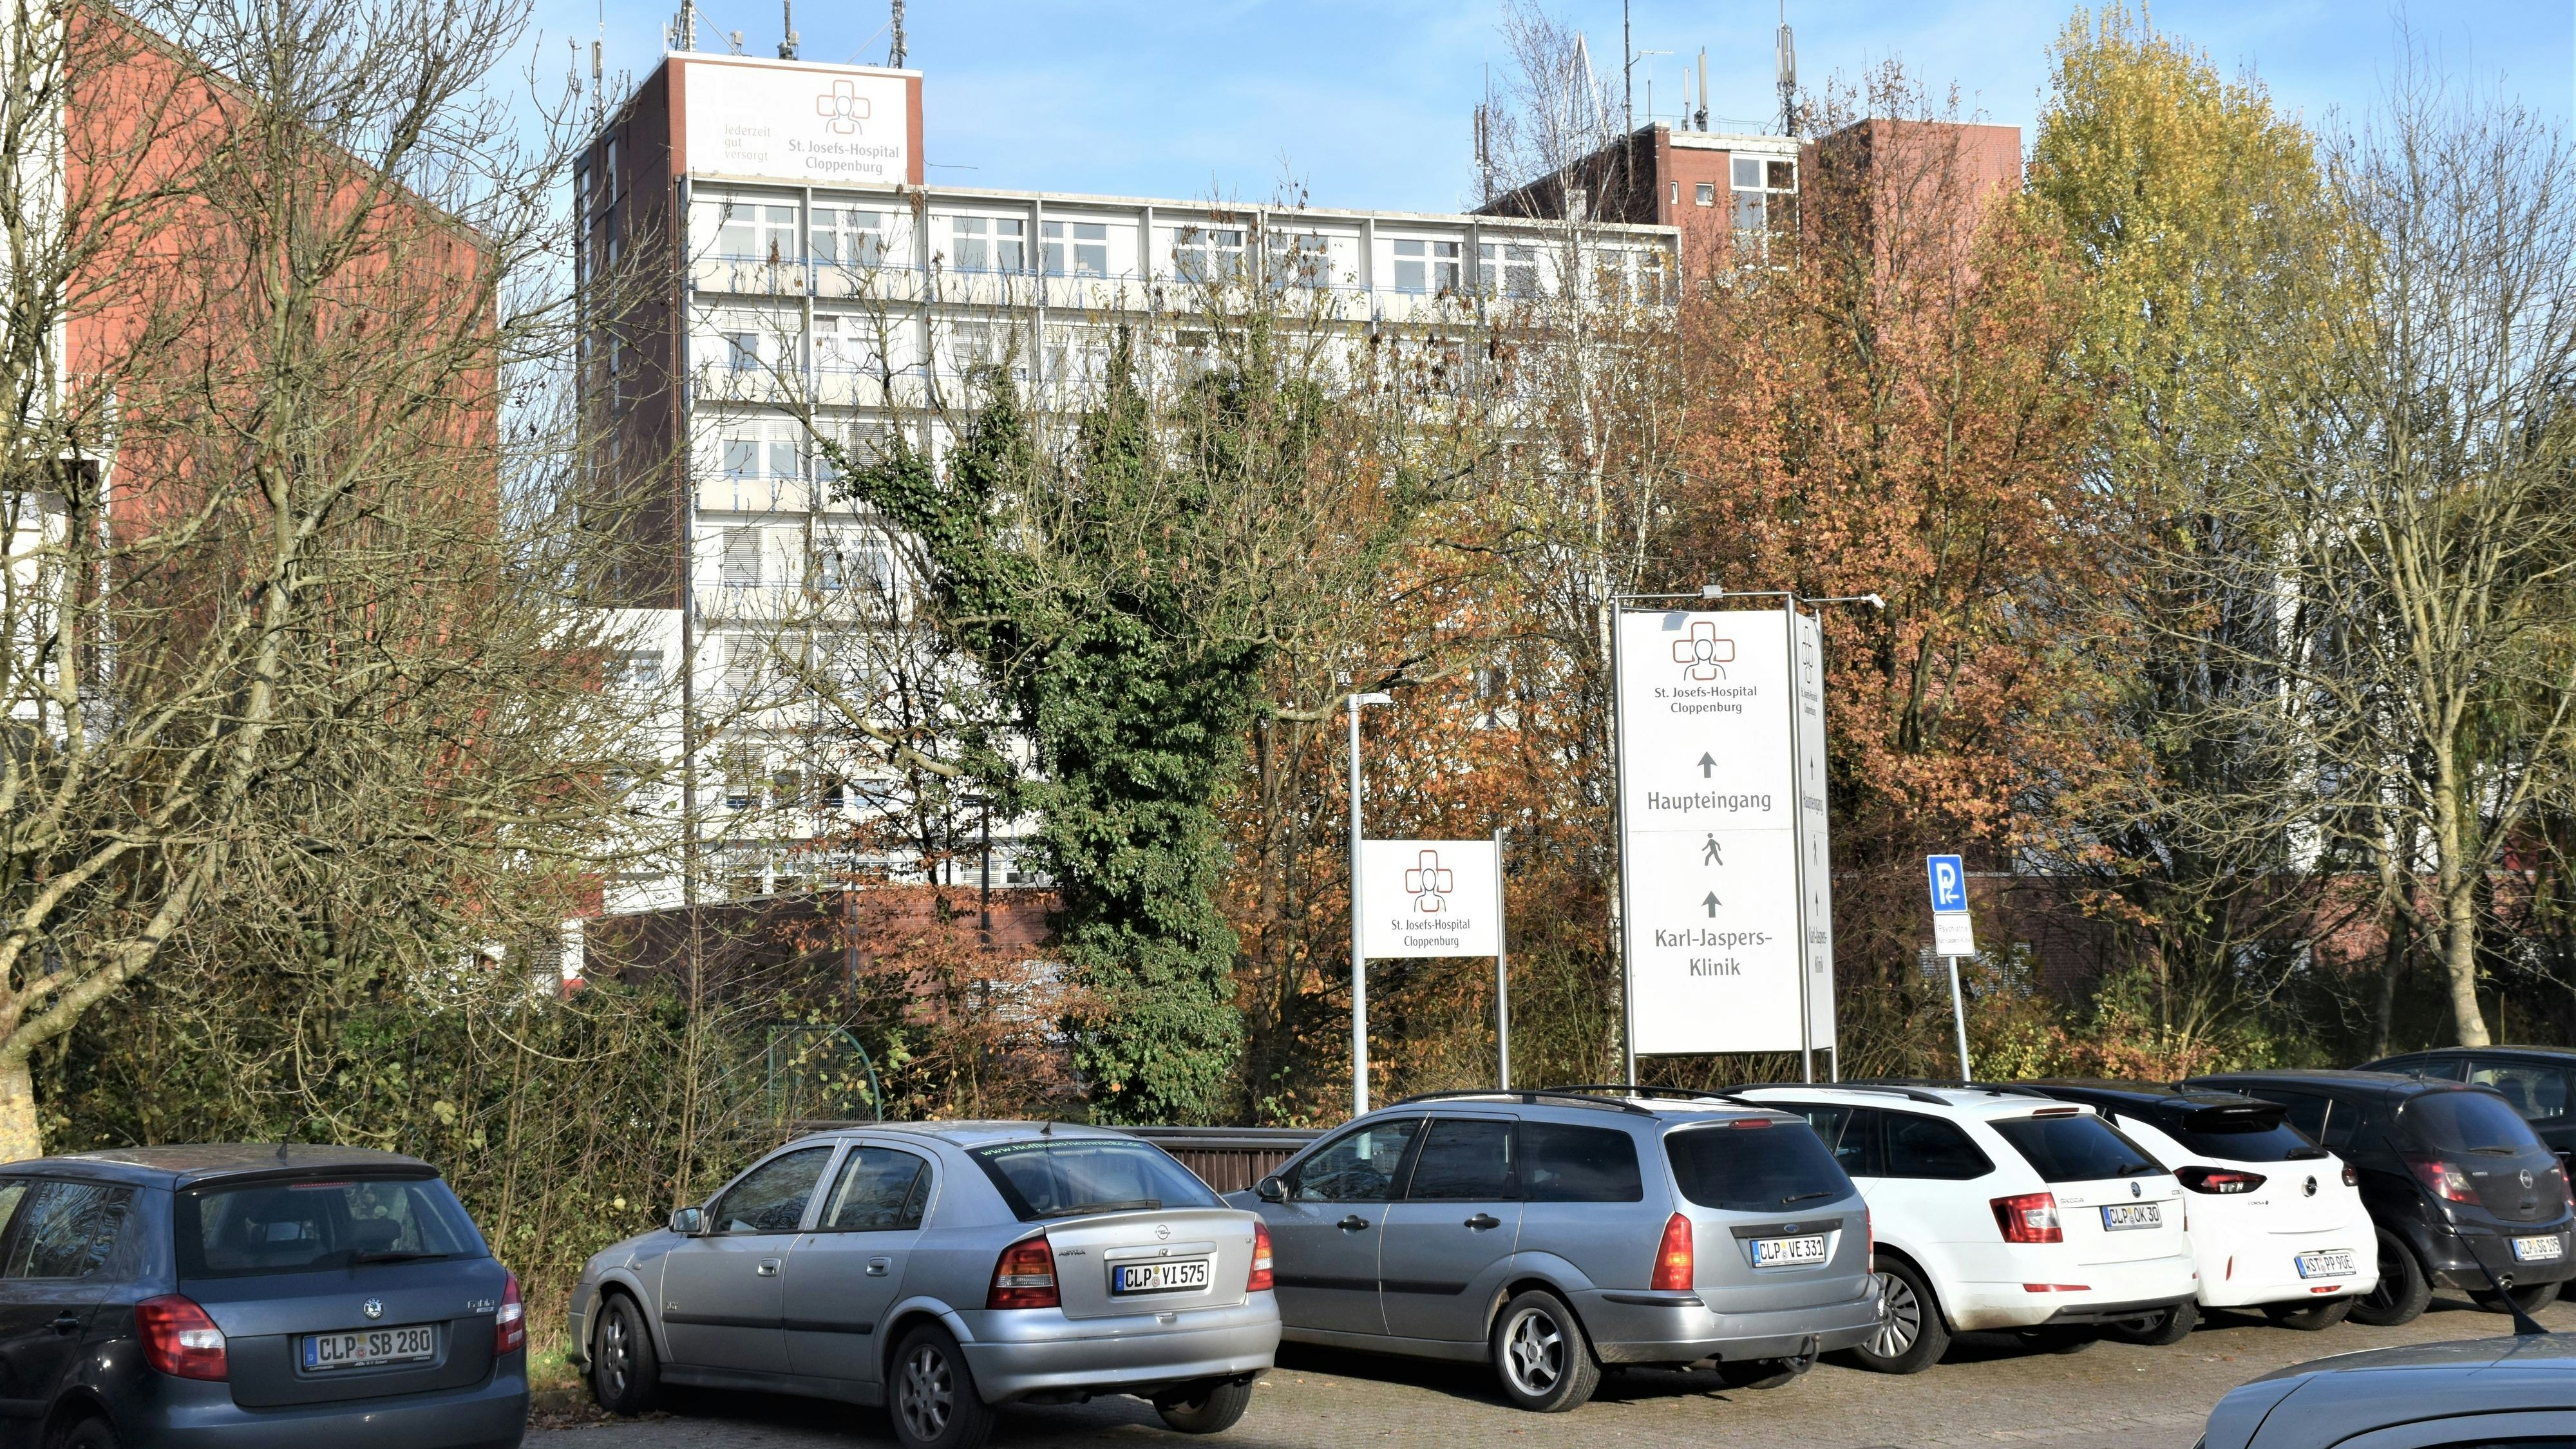 Der Kreißsaal im St. Josefs-Hospital wird nicht geschlossen: Solchen Gerüchten tritt die Verwaltungsleitung entgegen. Foto: Kühn